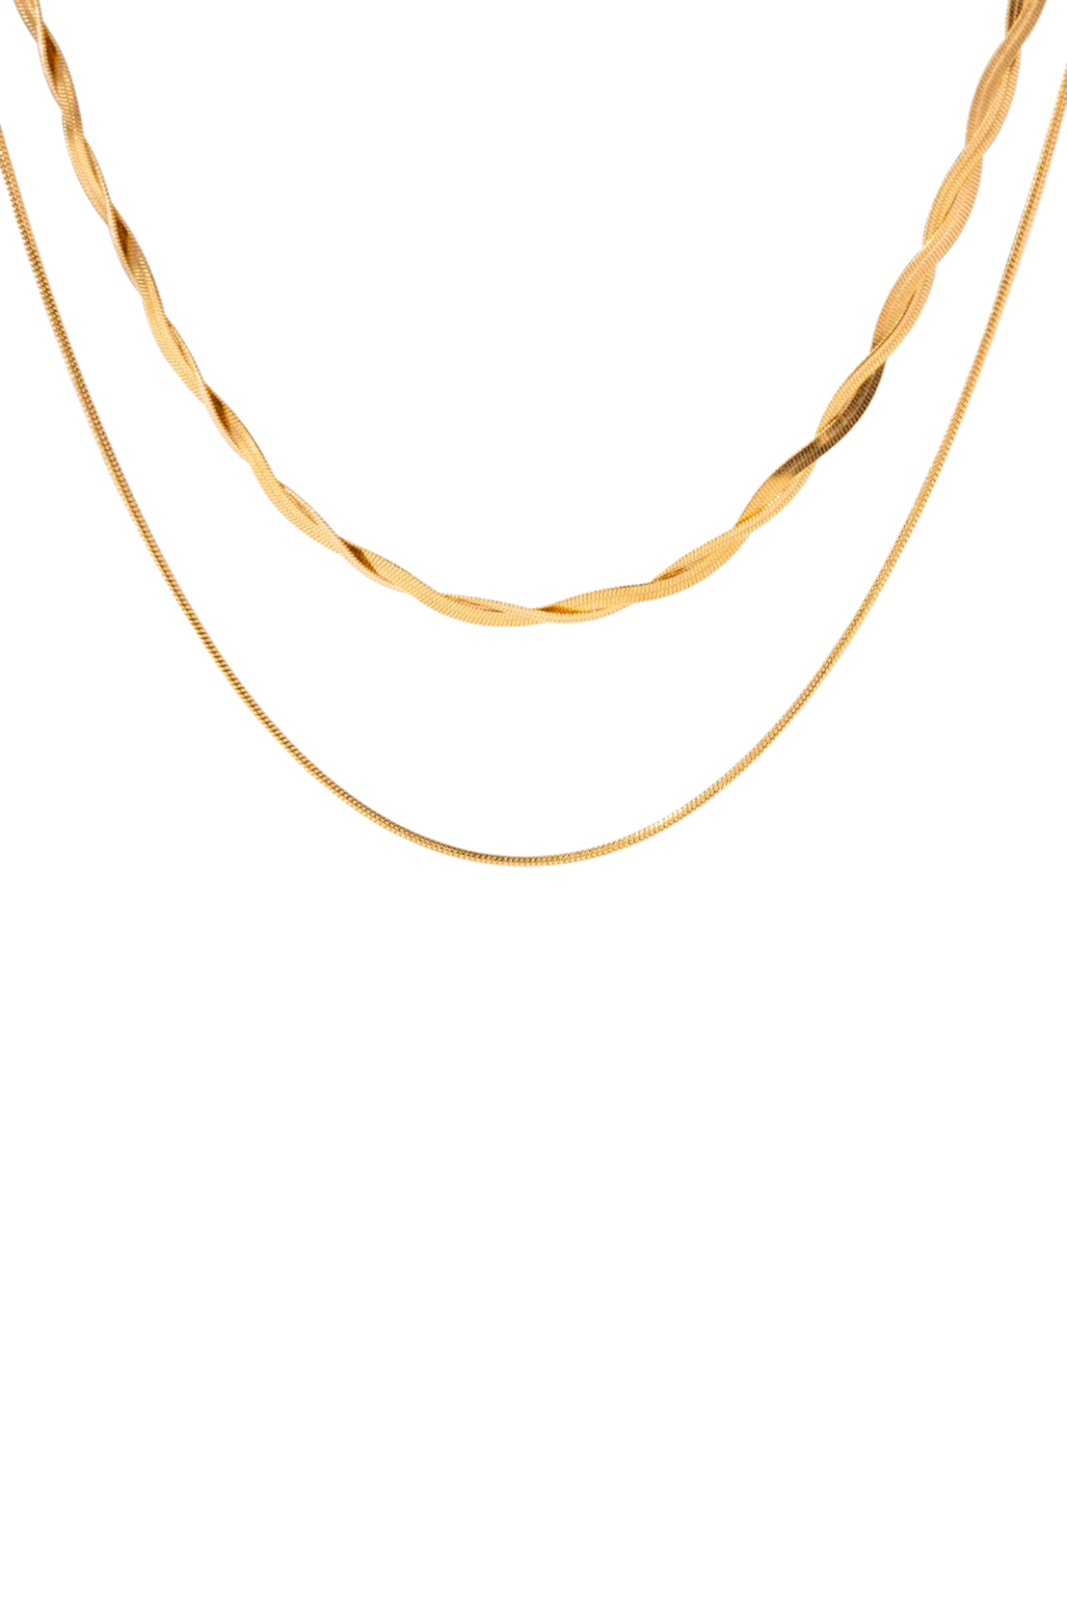 Buy more, save more! Bundle + Set - Gold Necklace.